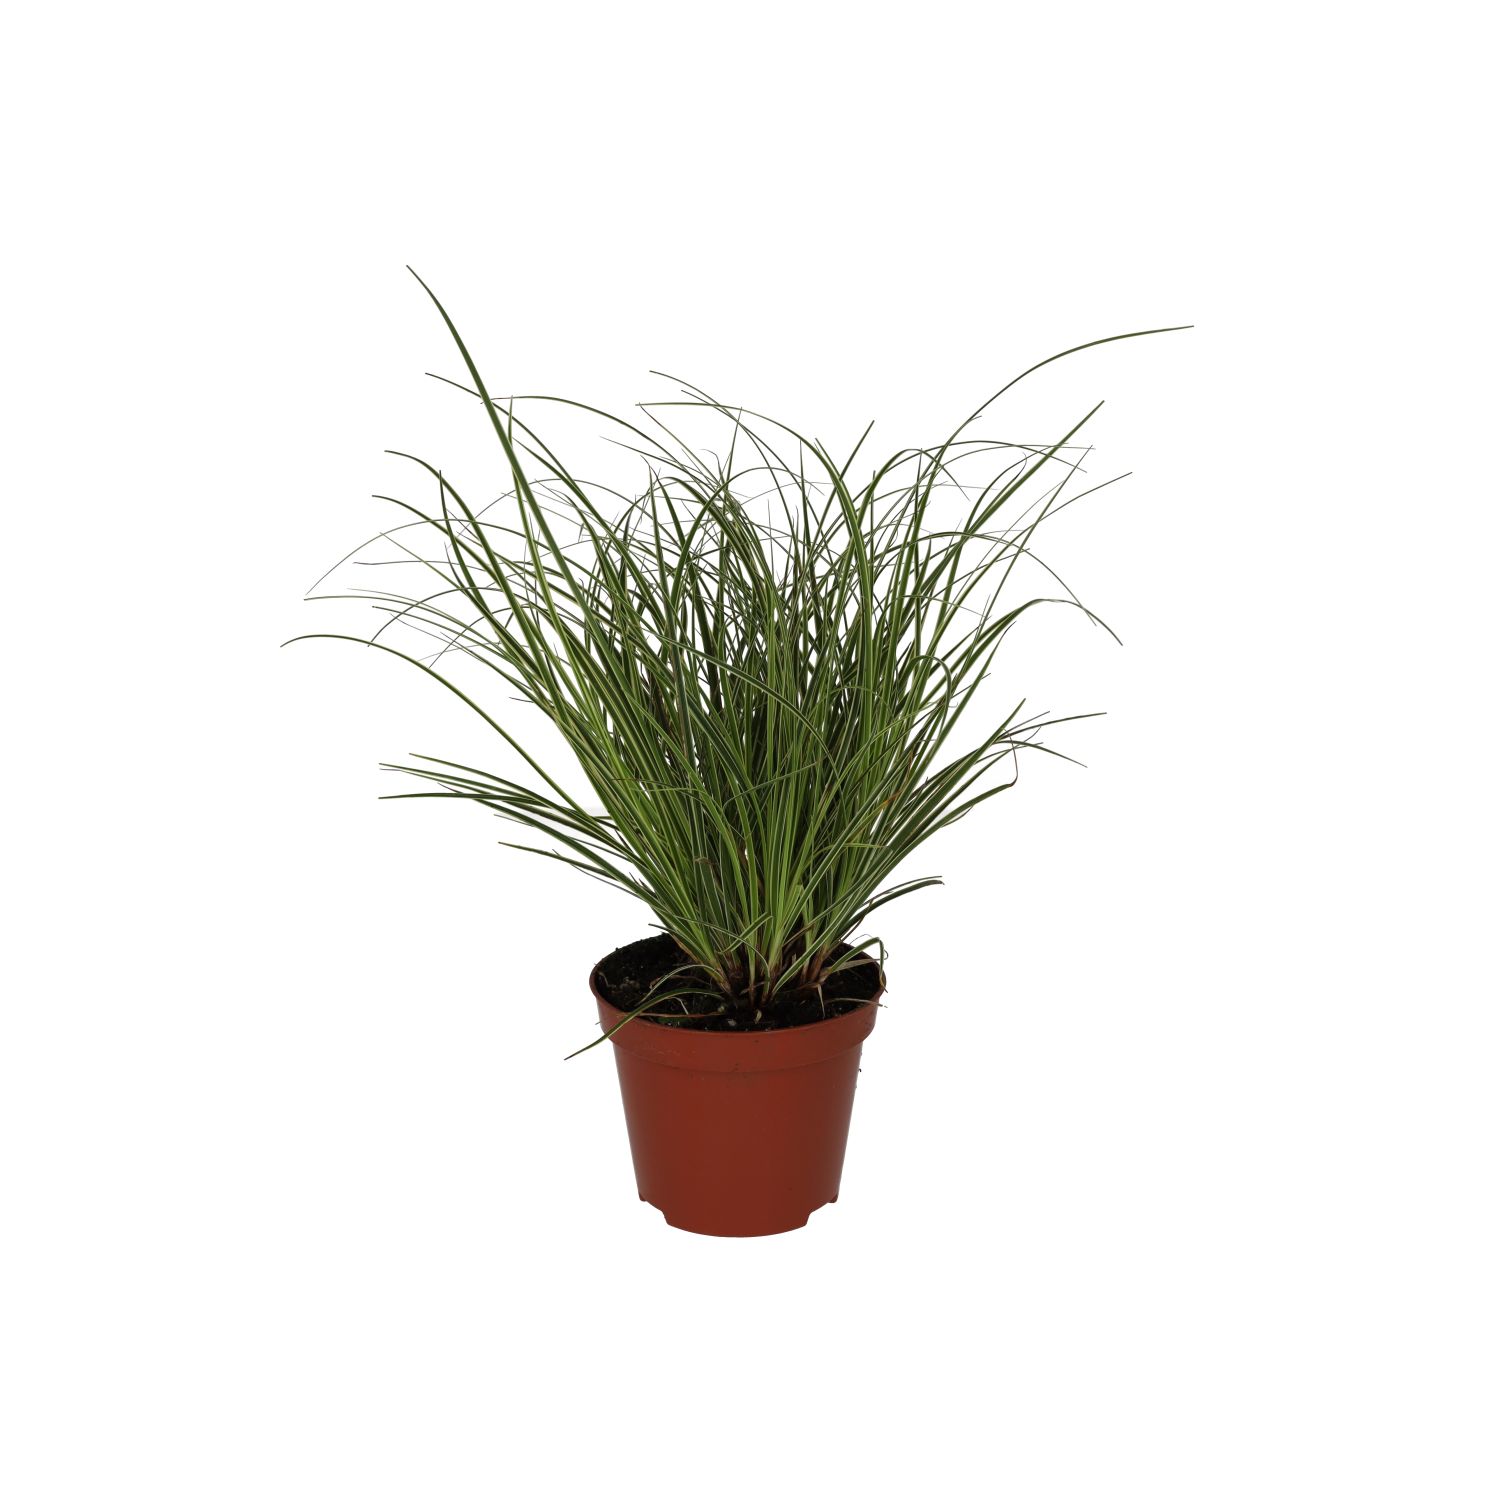 PR Live plant. Sedge Grass 'Jubilo' (Medium)